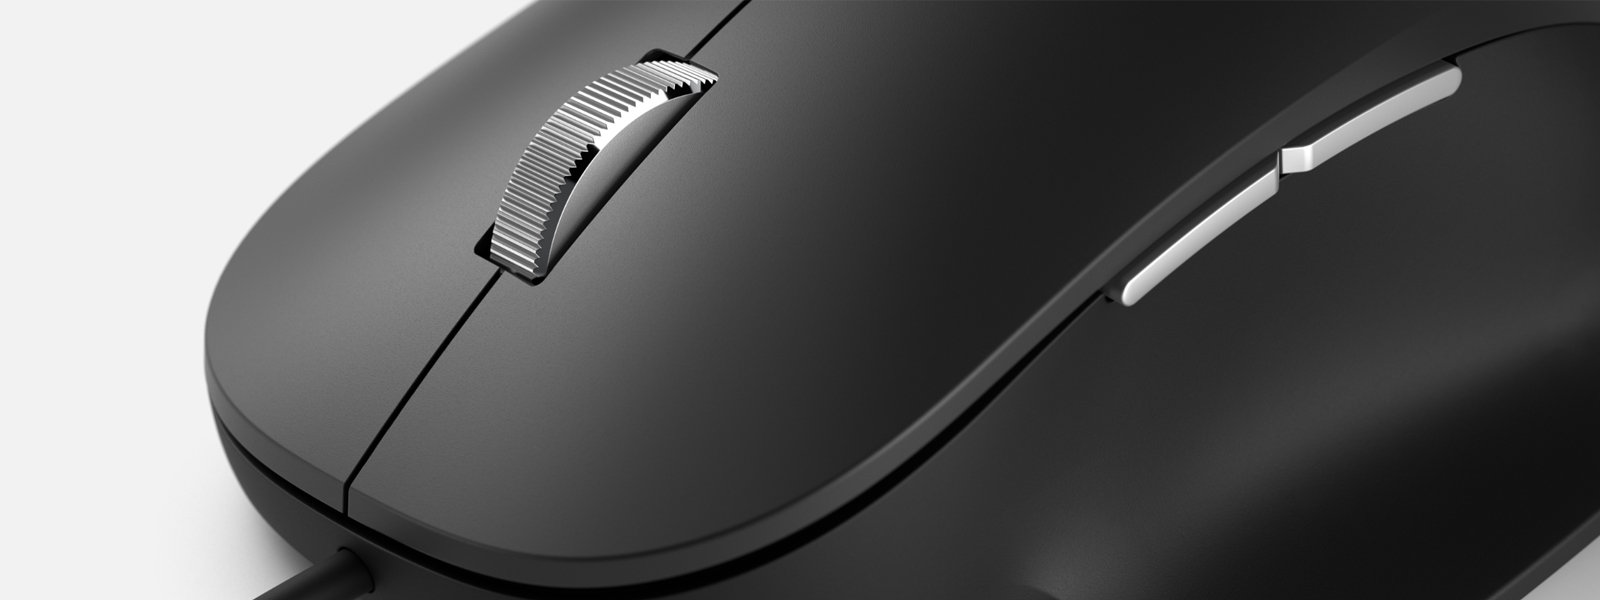 Microsoft Ergonomic Mouse.